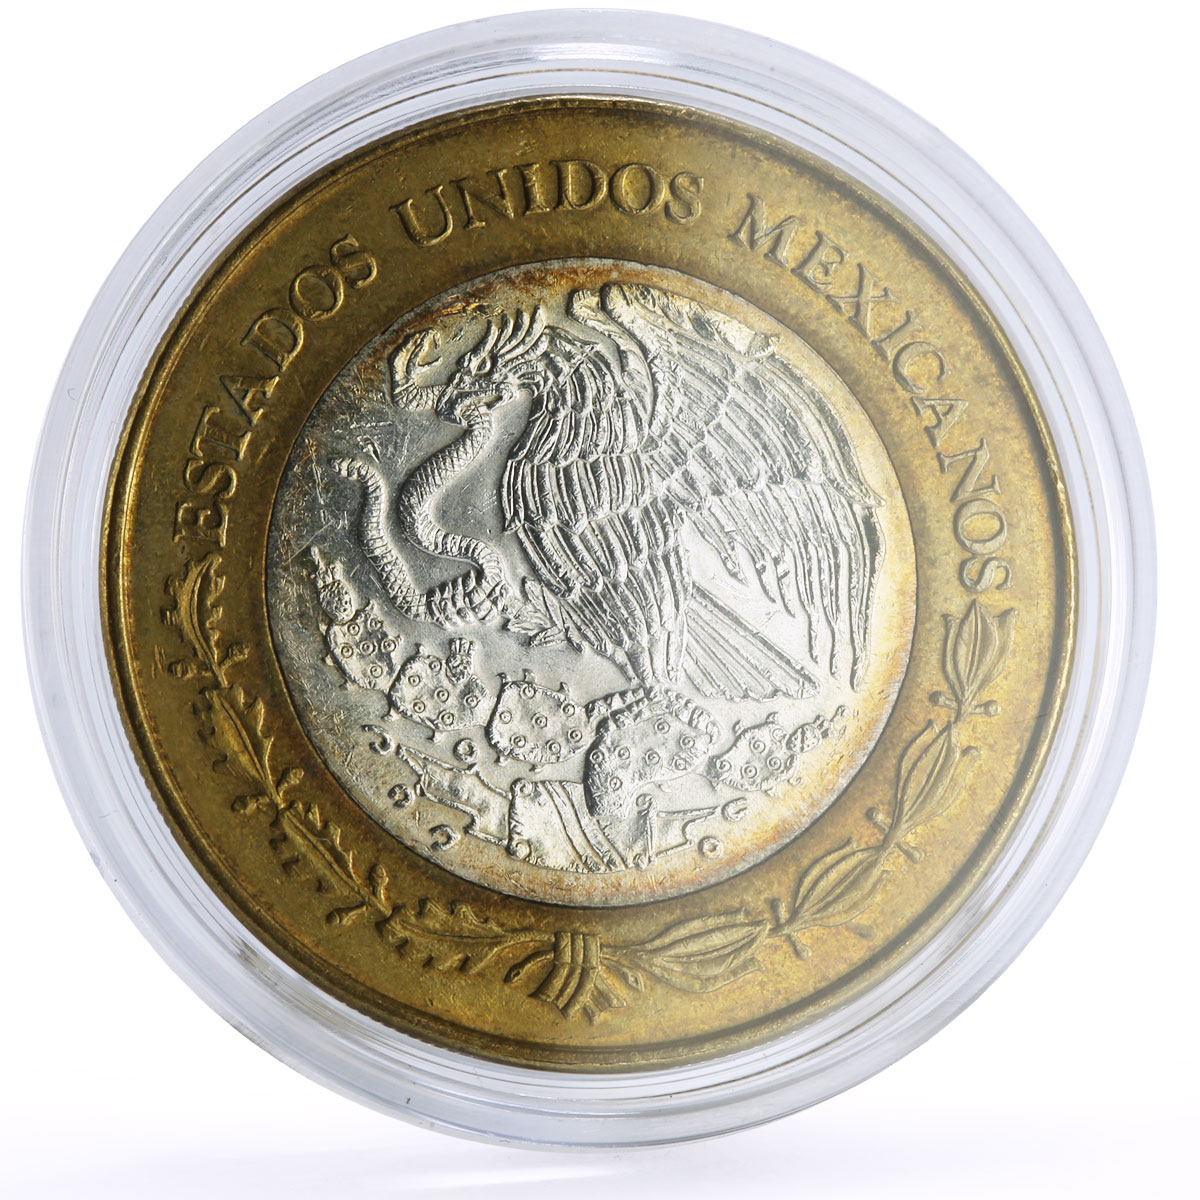 Mexico 100 pesos Michoacan State Monarch Butterflies Fauna bimetal coin 2006